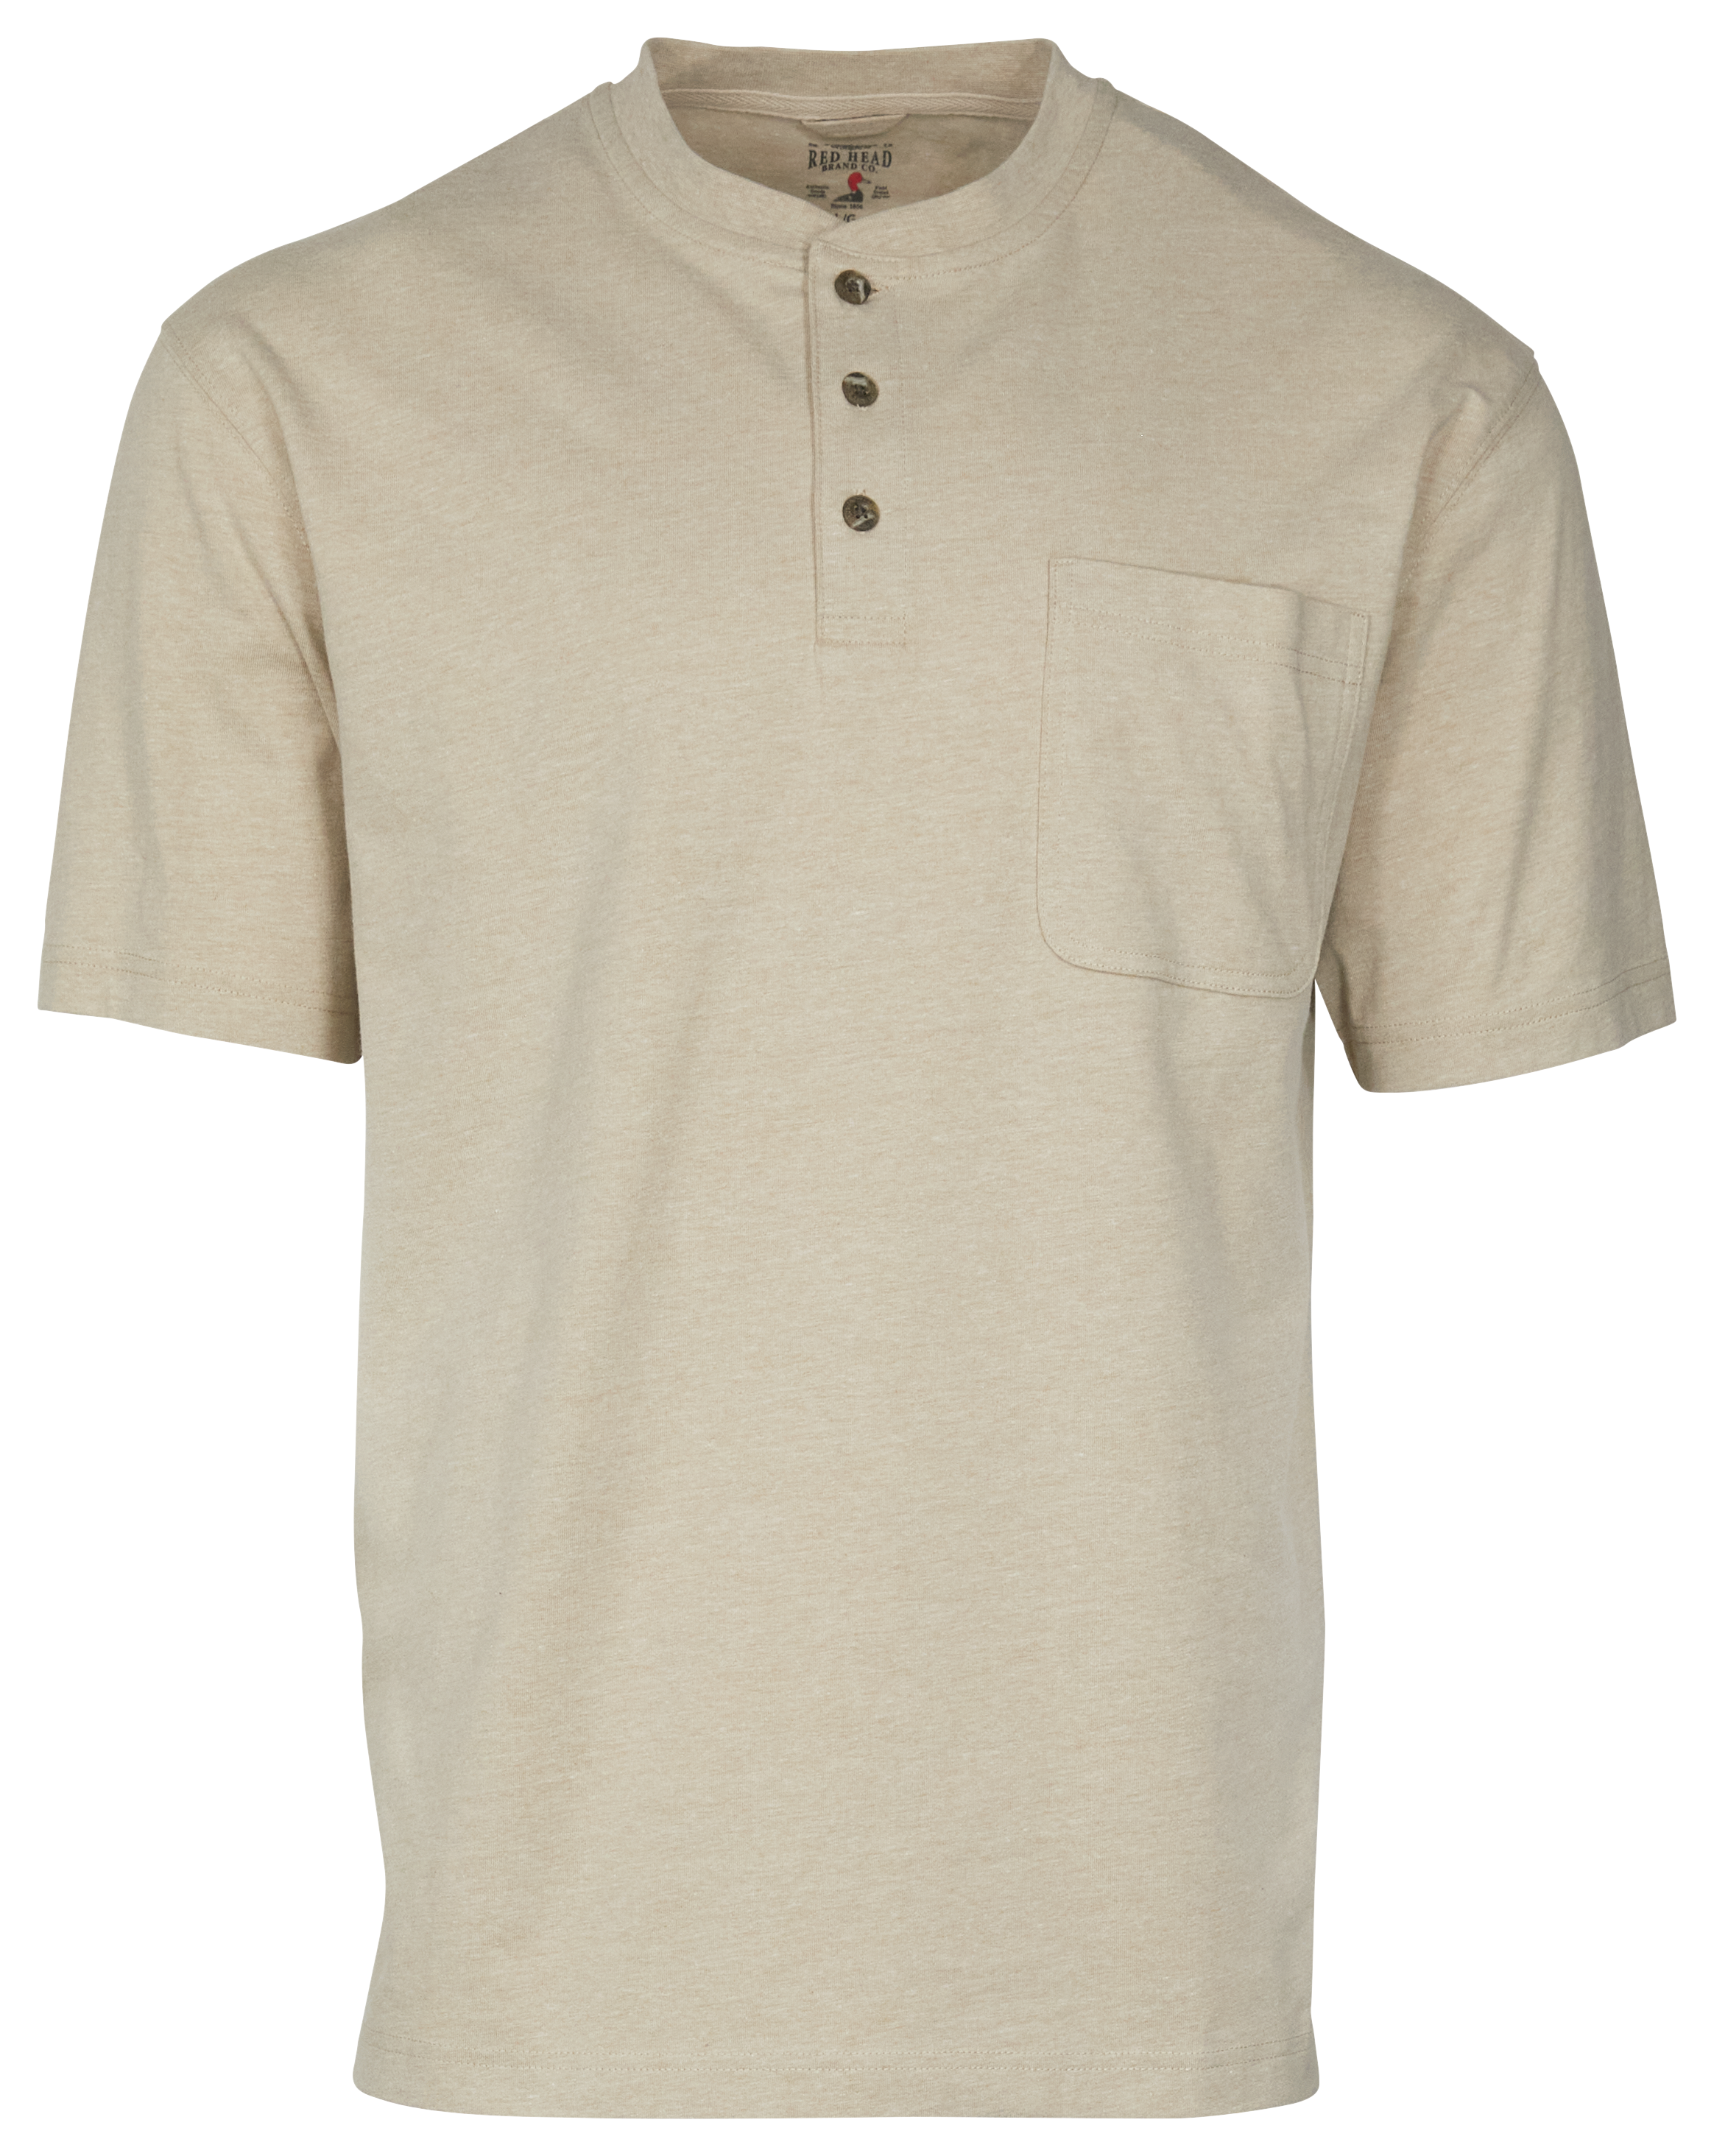 RedHead Henley Pocket Short-Sleeve Shirt for Men - Khaki Heather - M